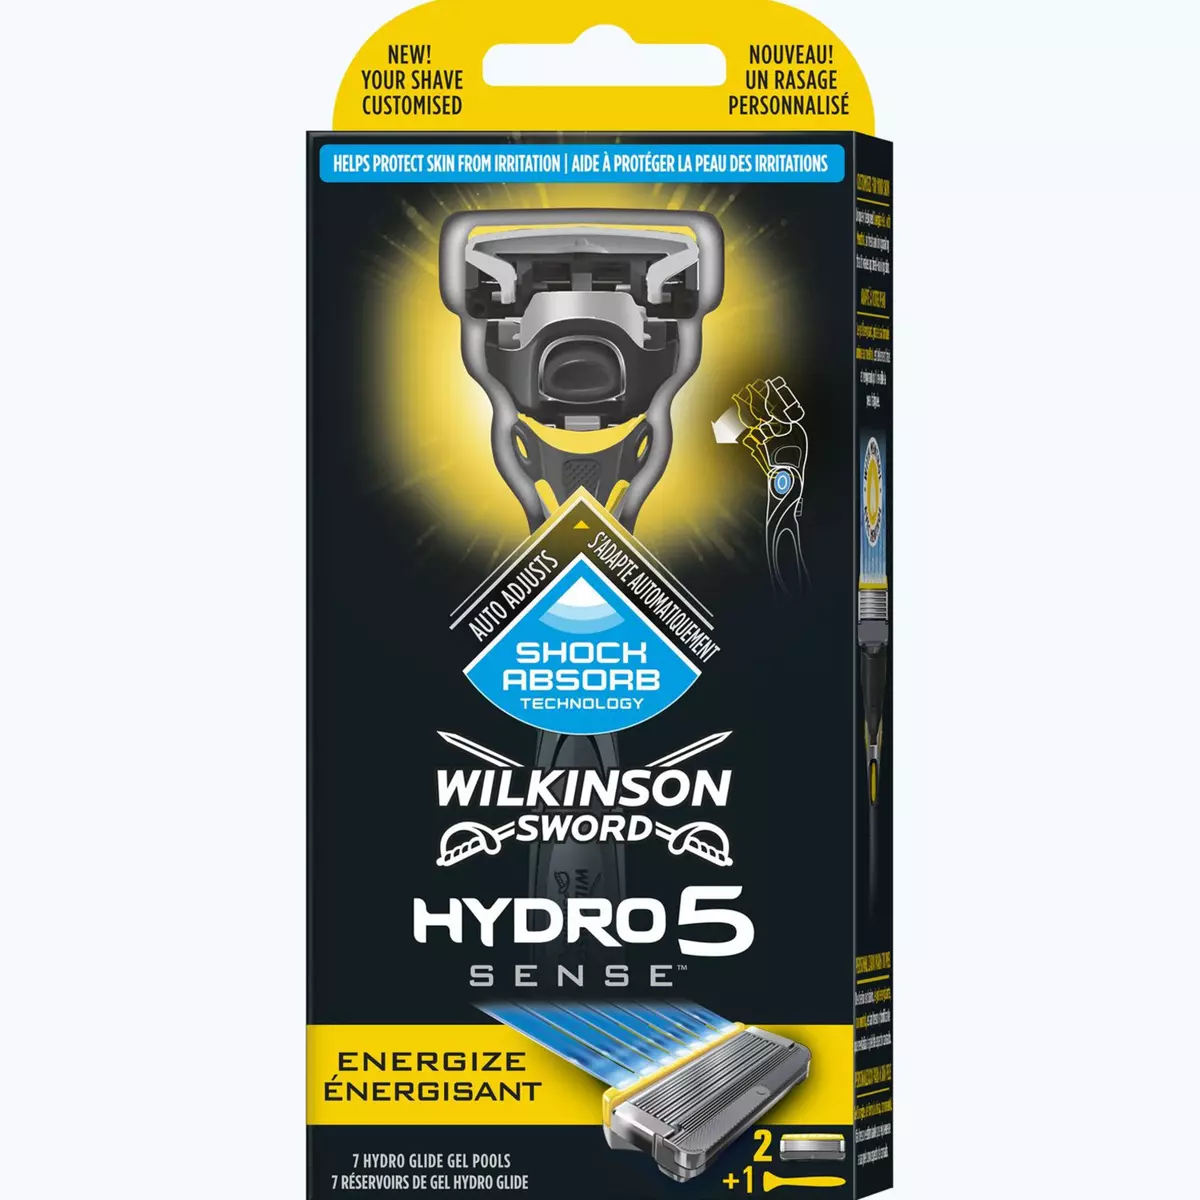 WILKINSON Hydro 5 Sense rasoir avec recharges 2 recharges 1 rasoir